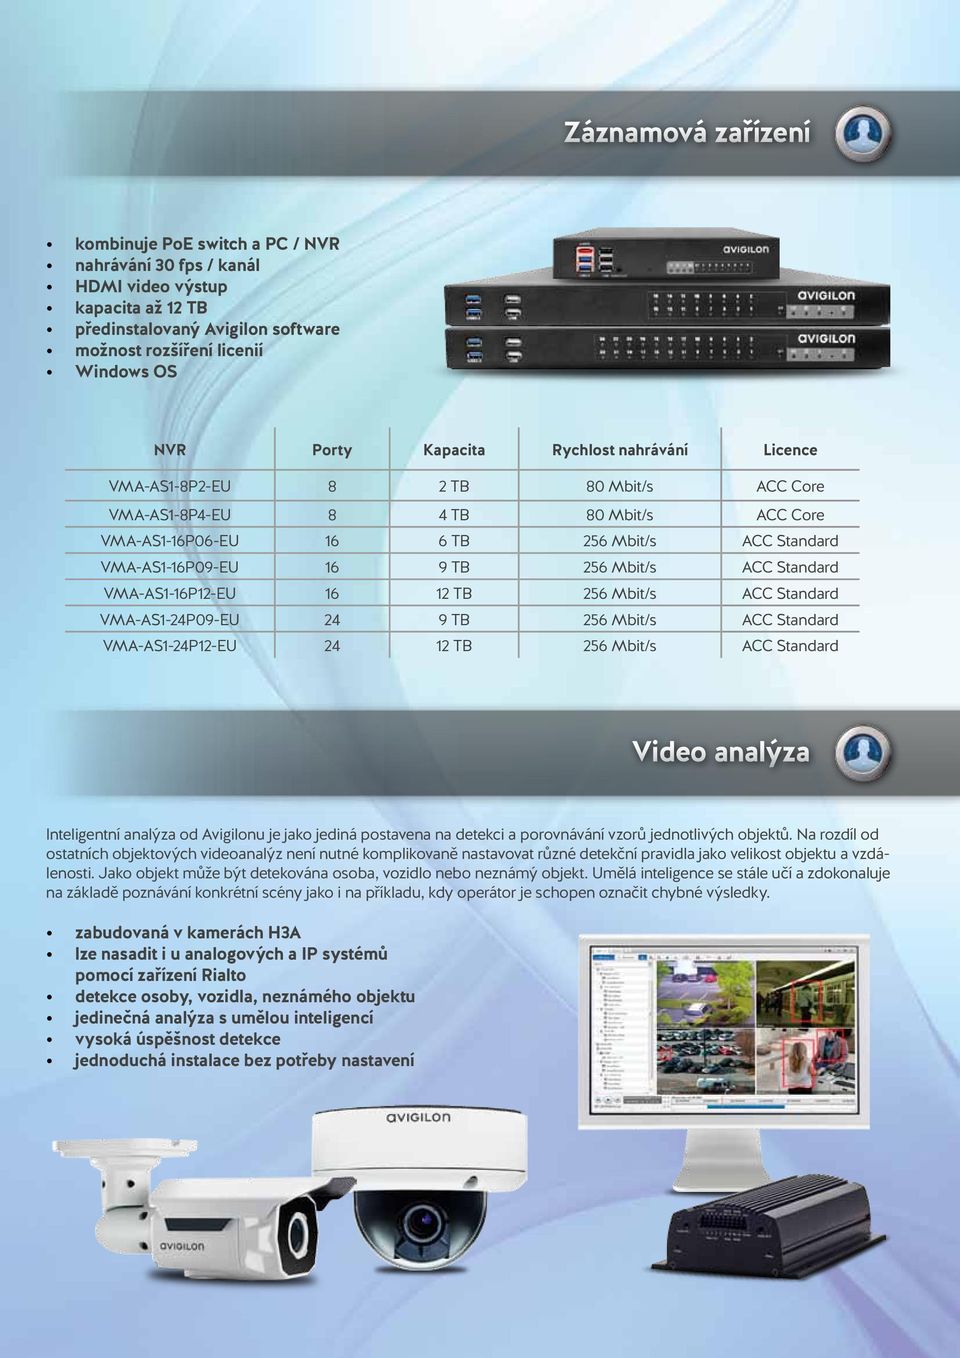 Mbit/s ACC Standard VMA-AS1-16P12-EU 16 12 TB 256 Mbit/s ACC Standard VMA-AS1-24P09-EU 24 9 TB 256 Mbit/s ACC Standard VMA-AS1-24P12-EU 24 12 TB 256 Mbit/s ACC Standard Video analýza Inteligentní